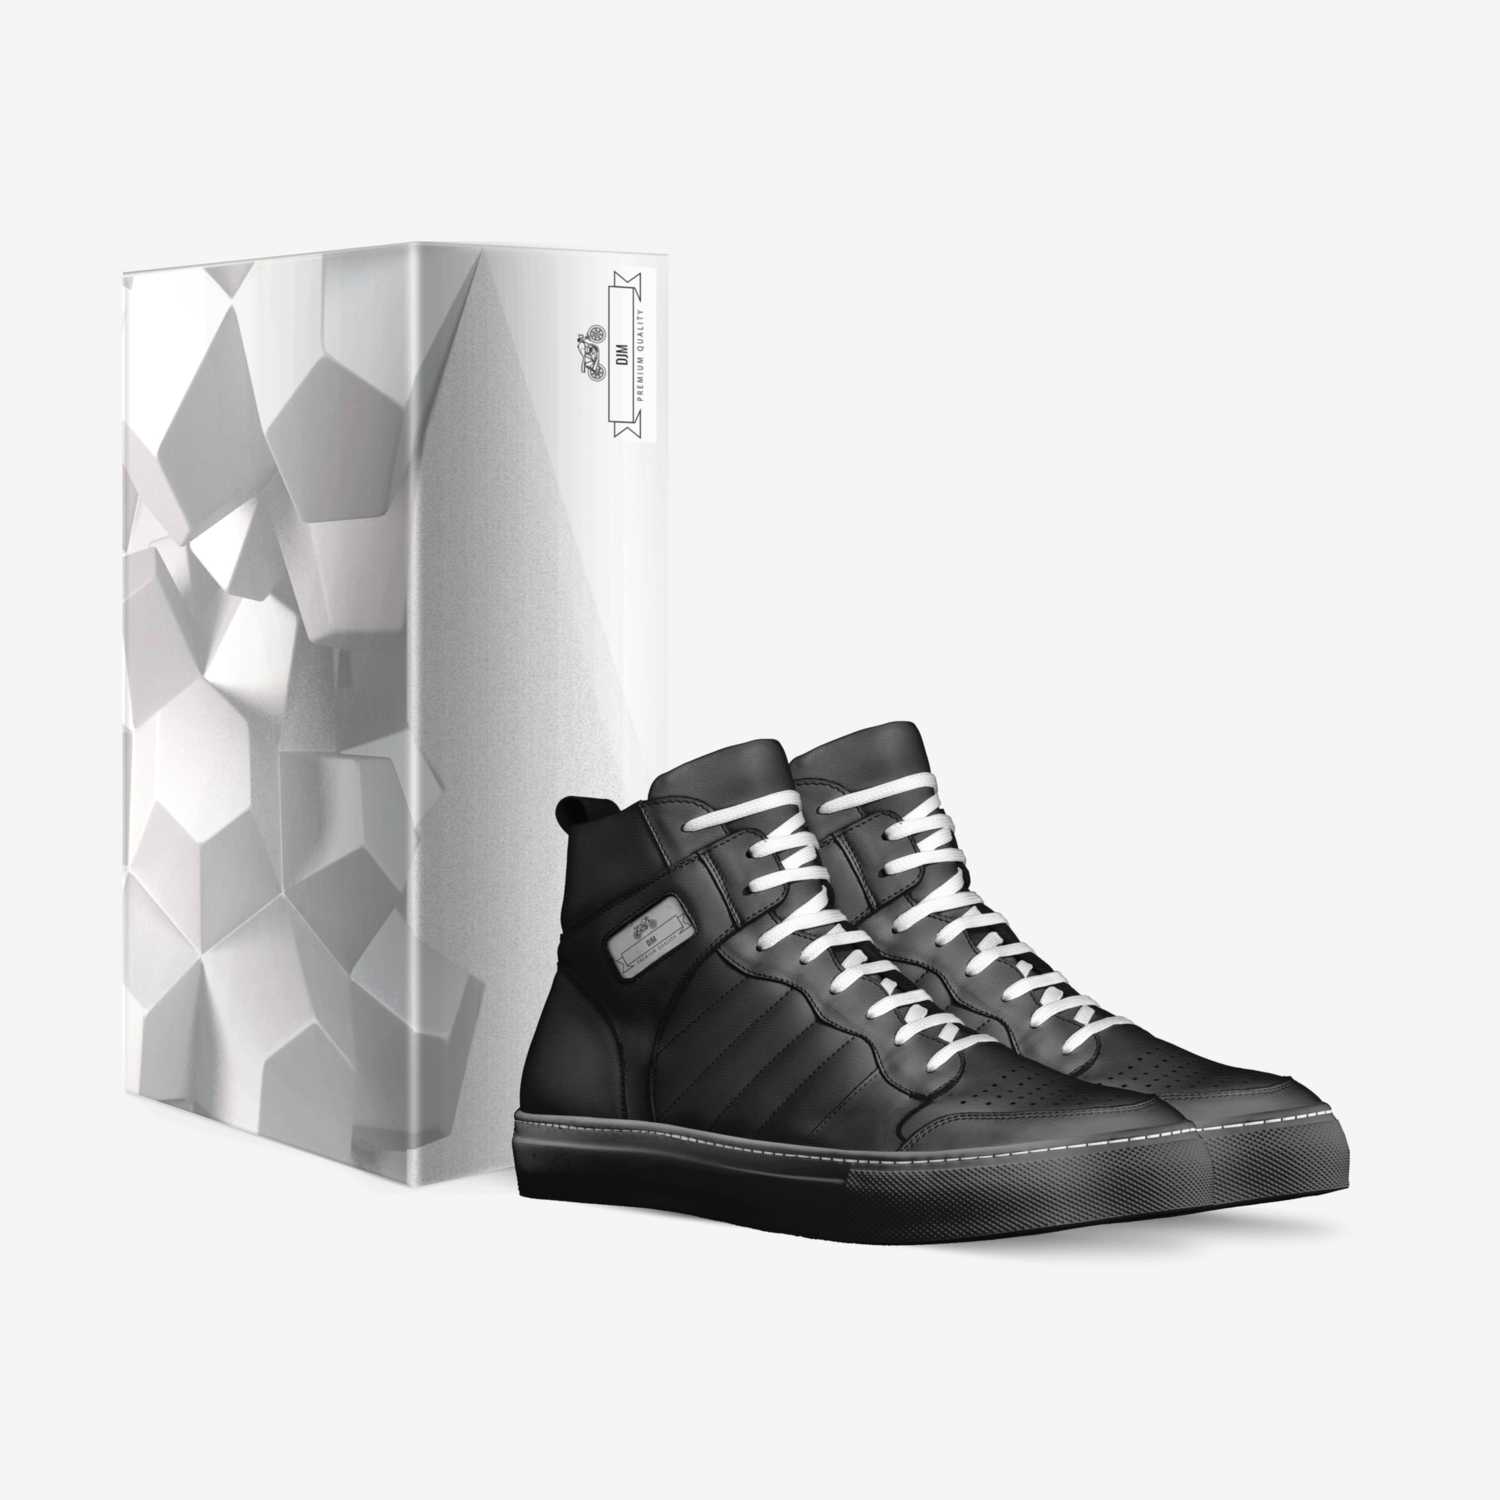 djm custom made in Italy shoes by Aidan Smith Mcglynn | Box view